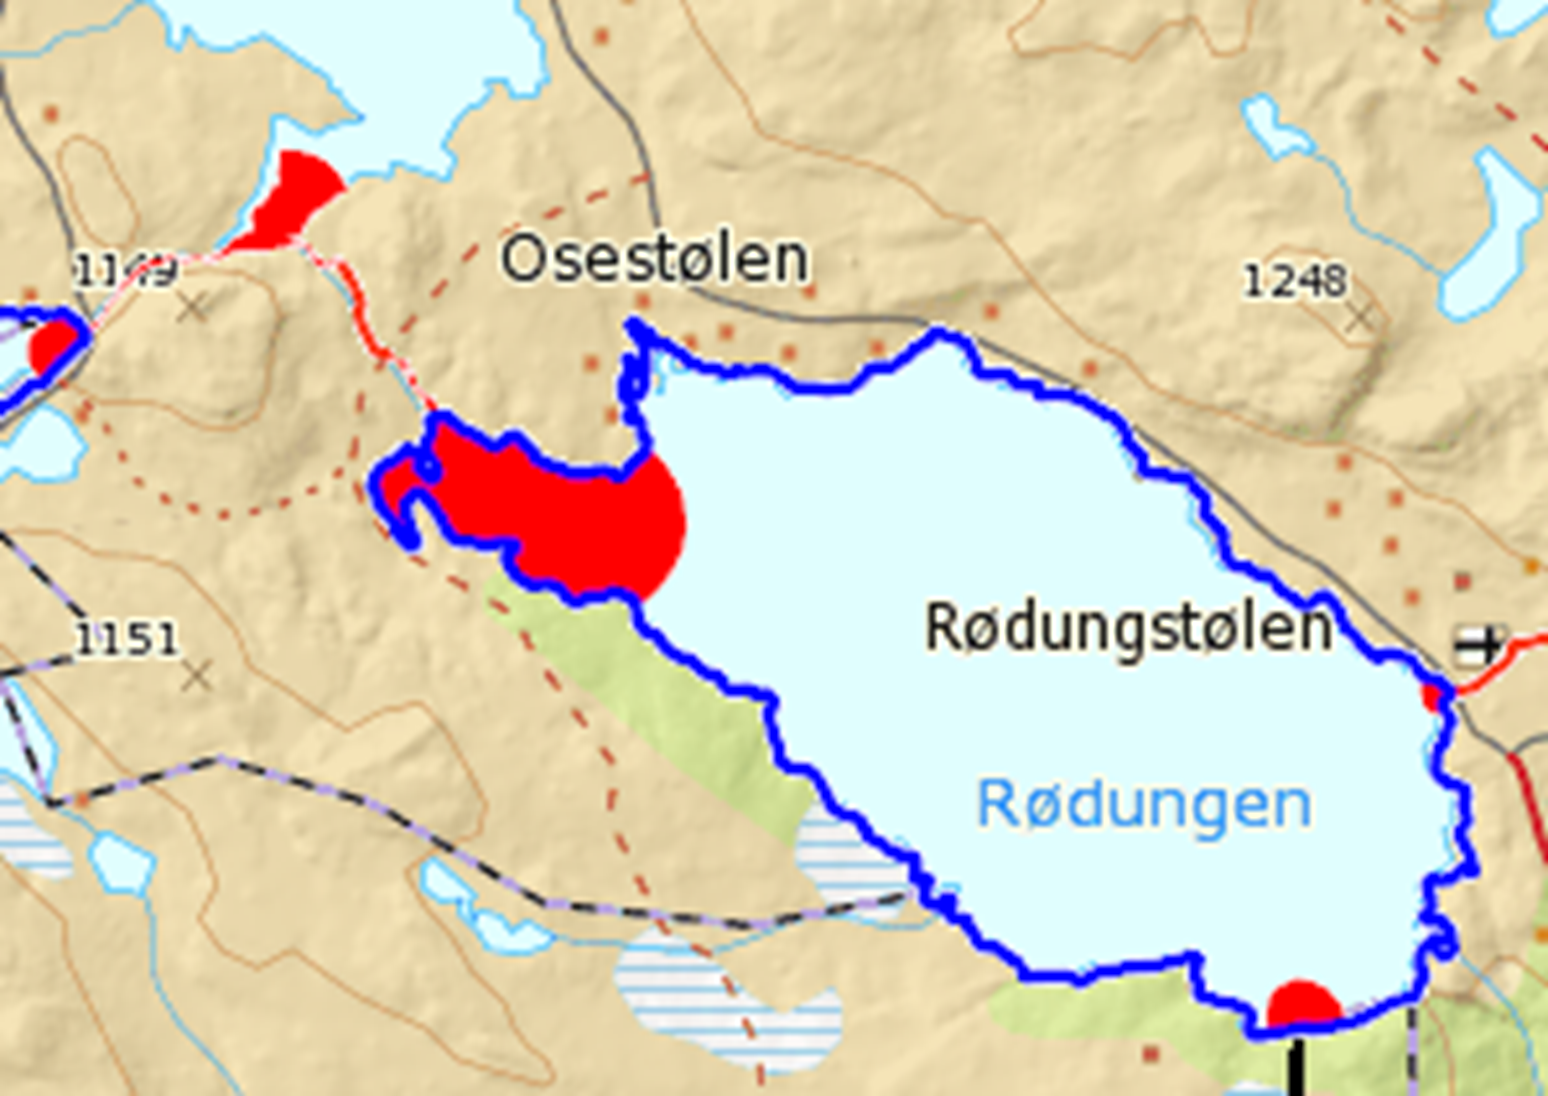 Kart hvor områder med svekket is er markert med rødt.